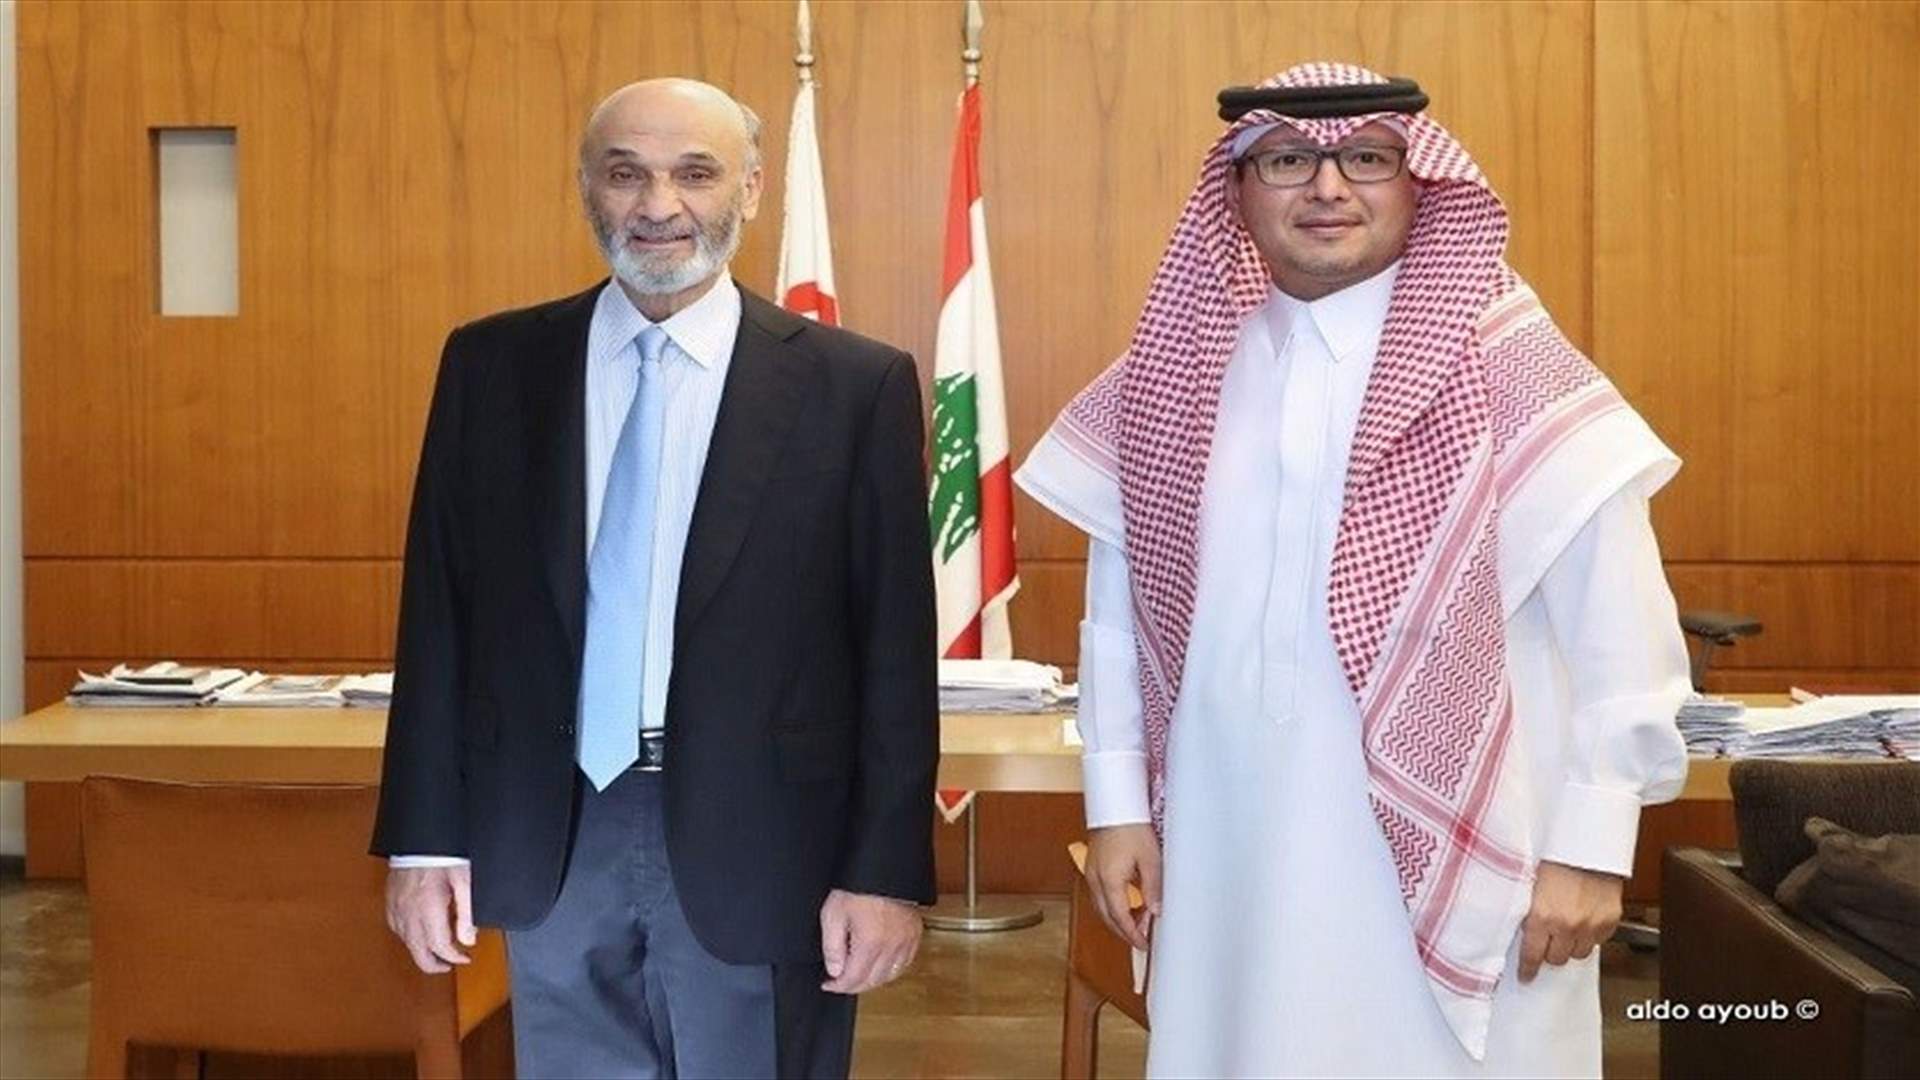 Geagea meets with Saudi ambassador to Lebanon-[PHOTOS]